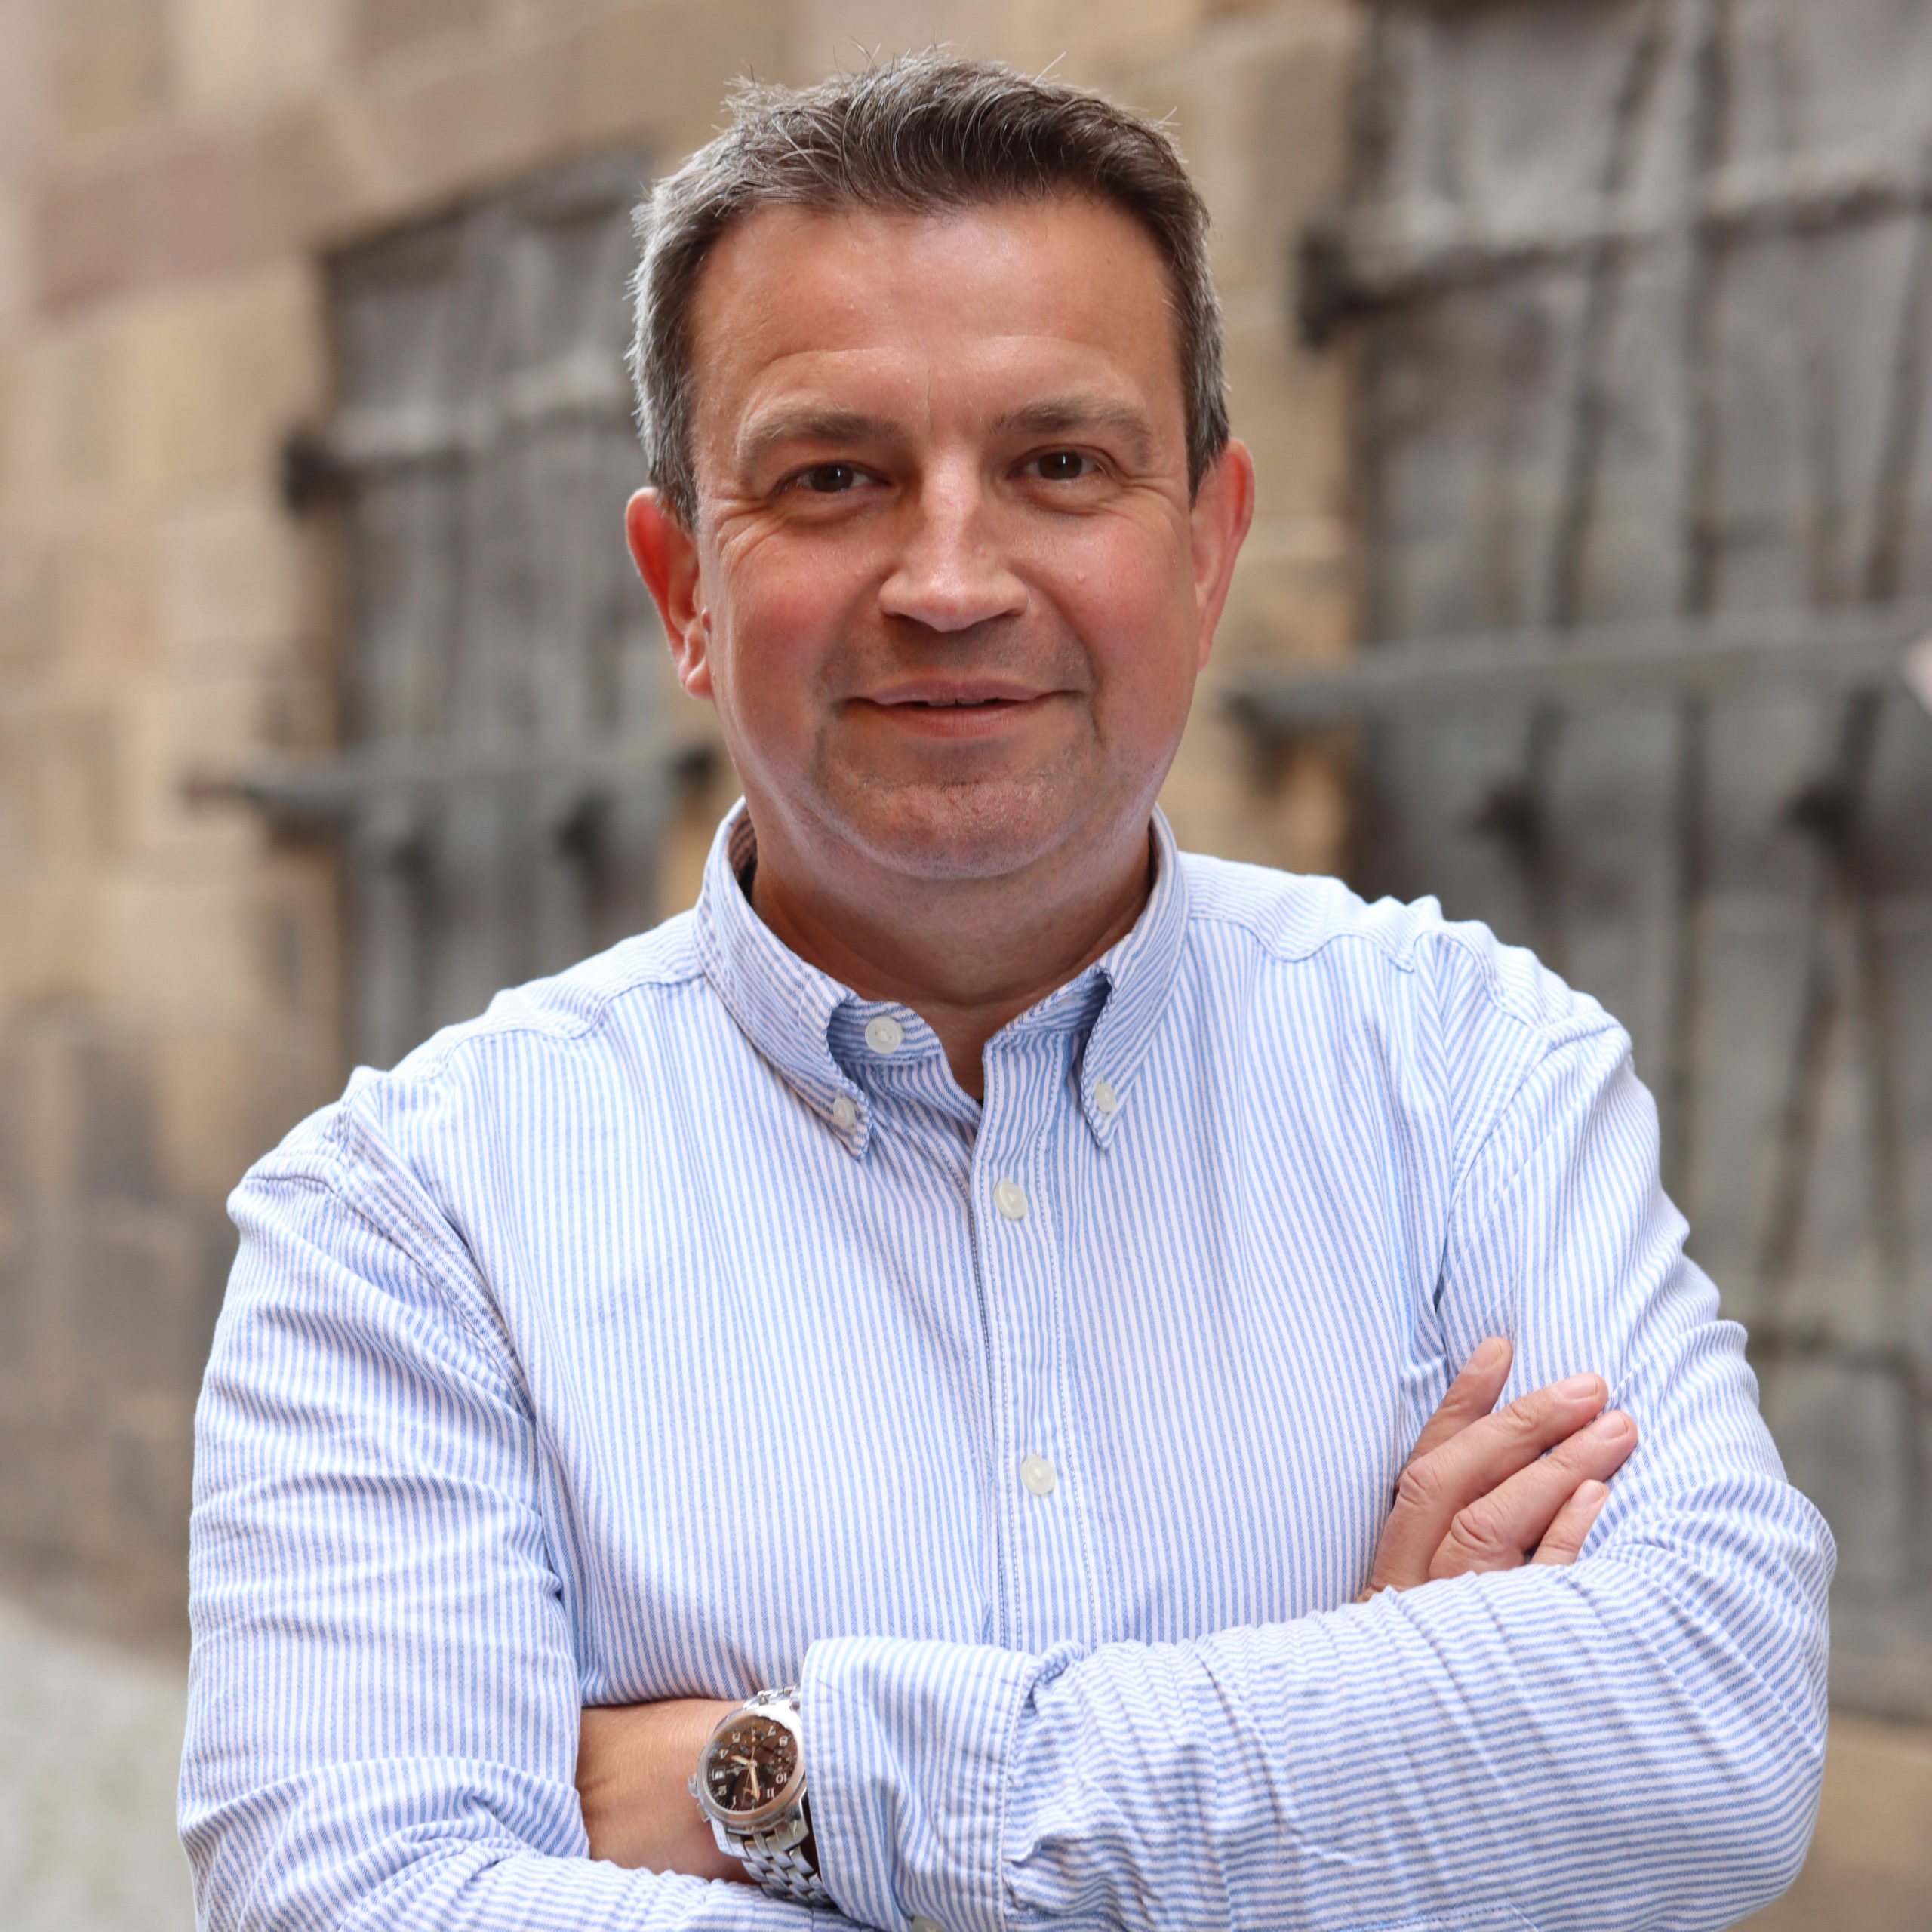 Johan Munck, CEO, Polarn O Pyret